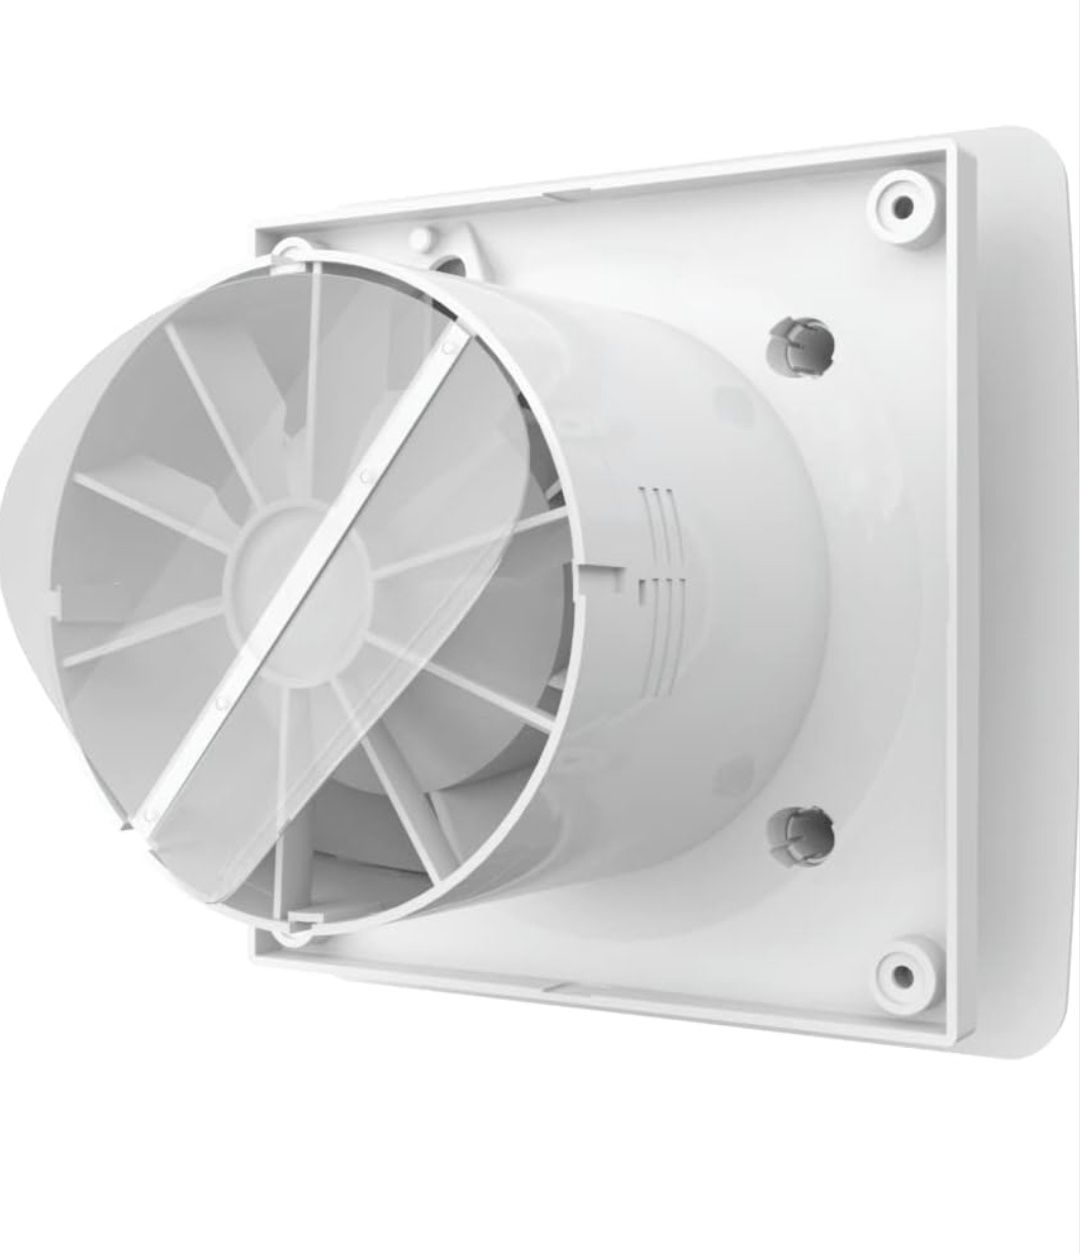 Ventilator Bosch 1500 DH